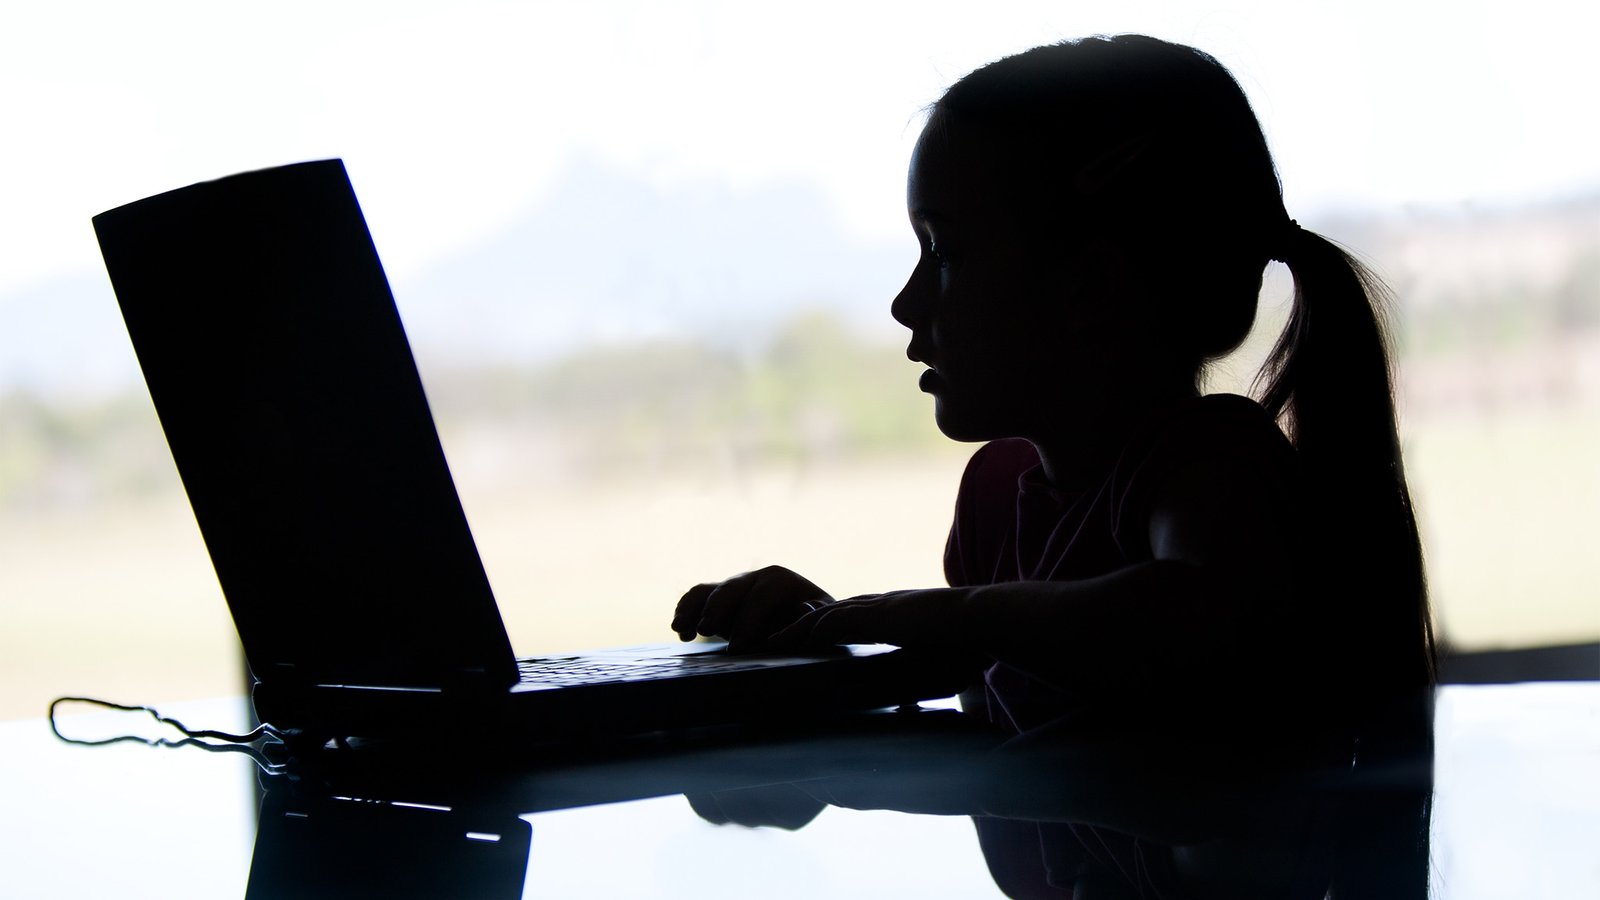 TUTURA.ID - Bahaya pornografi mengintai anak di media sosial